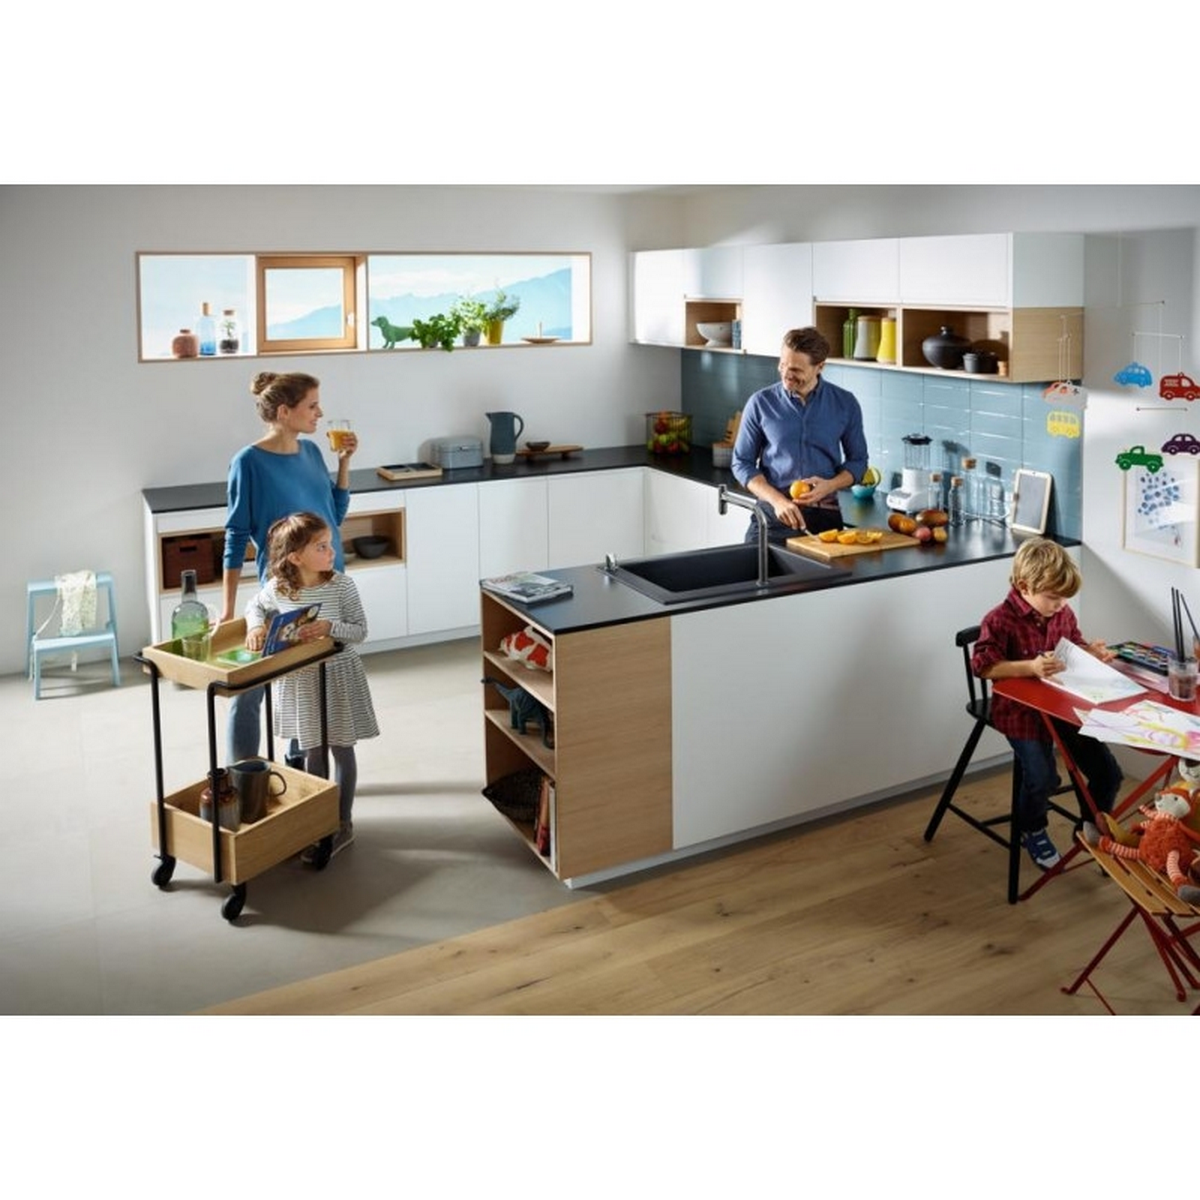 Кухонный комплект Hansgrohe C51-F660-07 43218000 цена 46726 грн - фотография 2